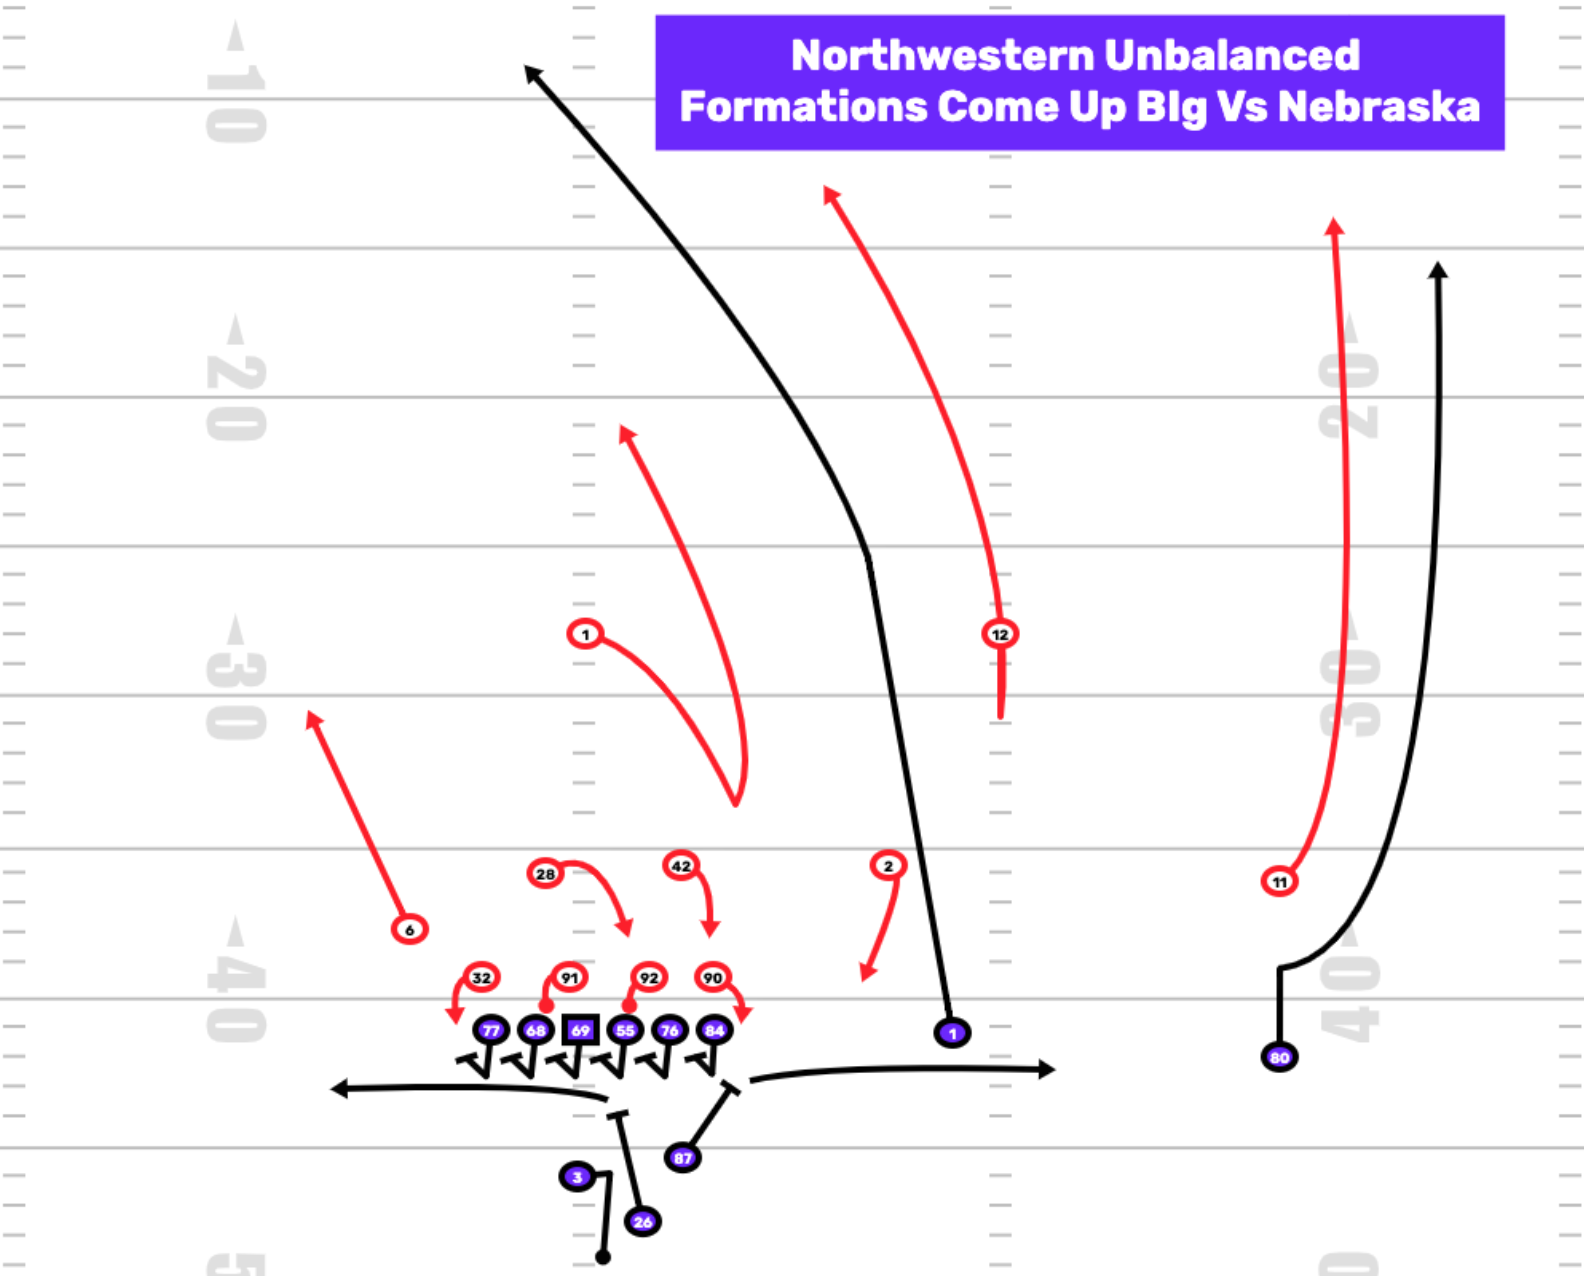 Northwestern Unbalanced Formation Comes Up Big